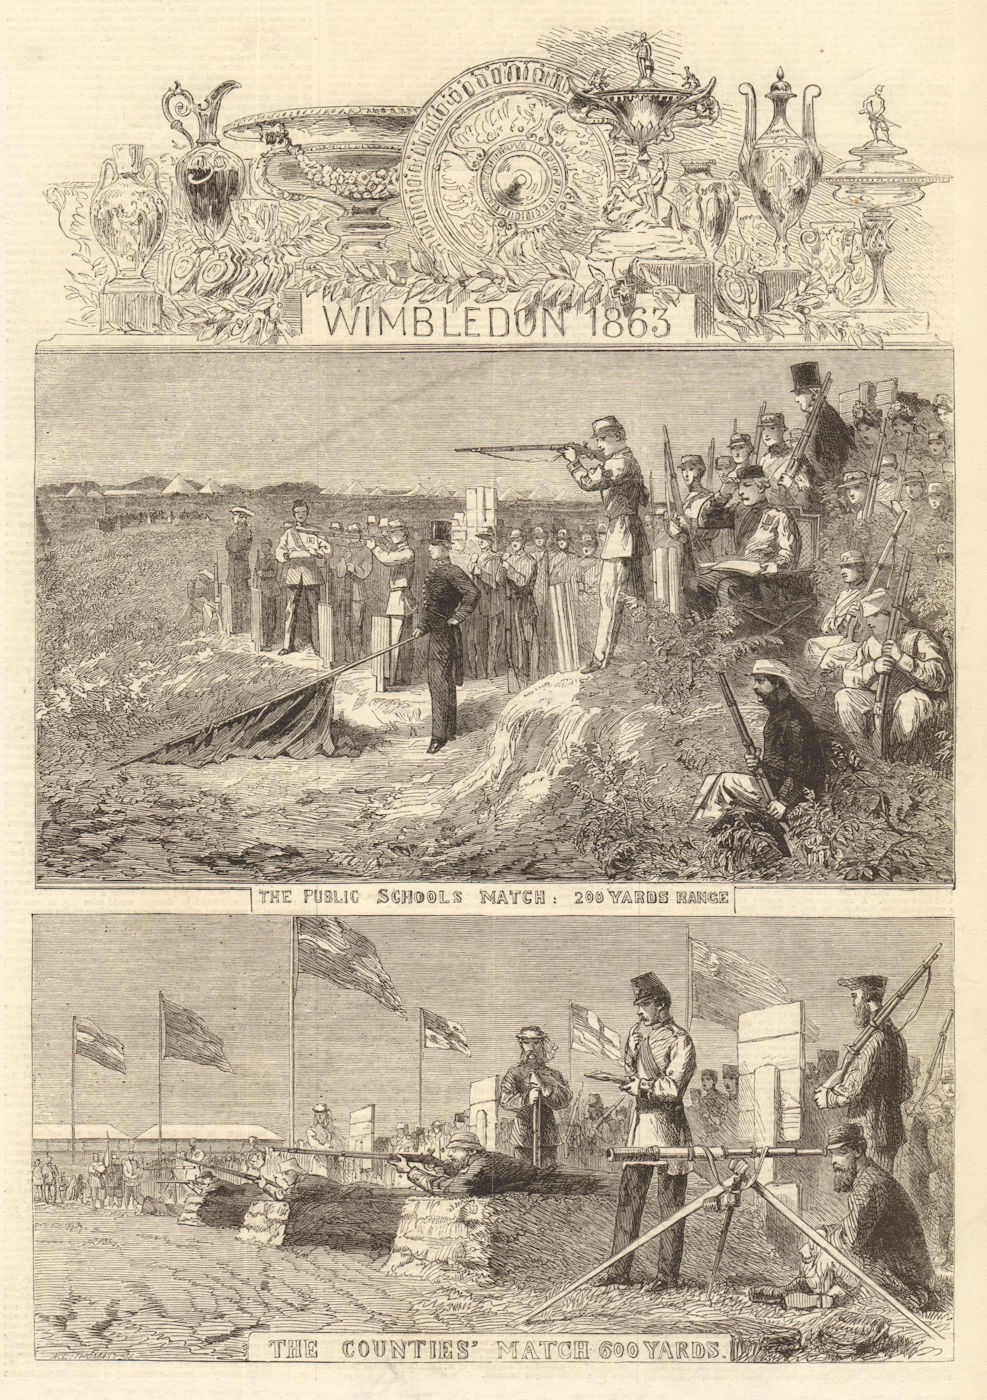 Wimbledon 1863 Rifle meeting. Public schools 200 yards range Counties 600 1863